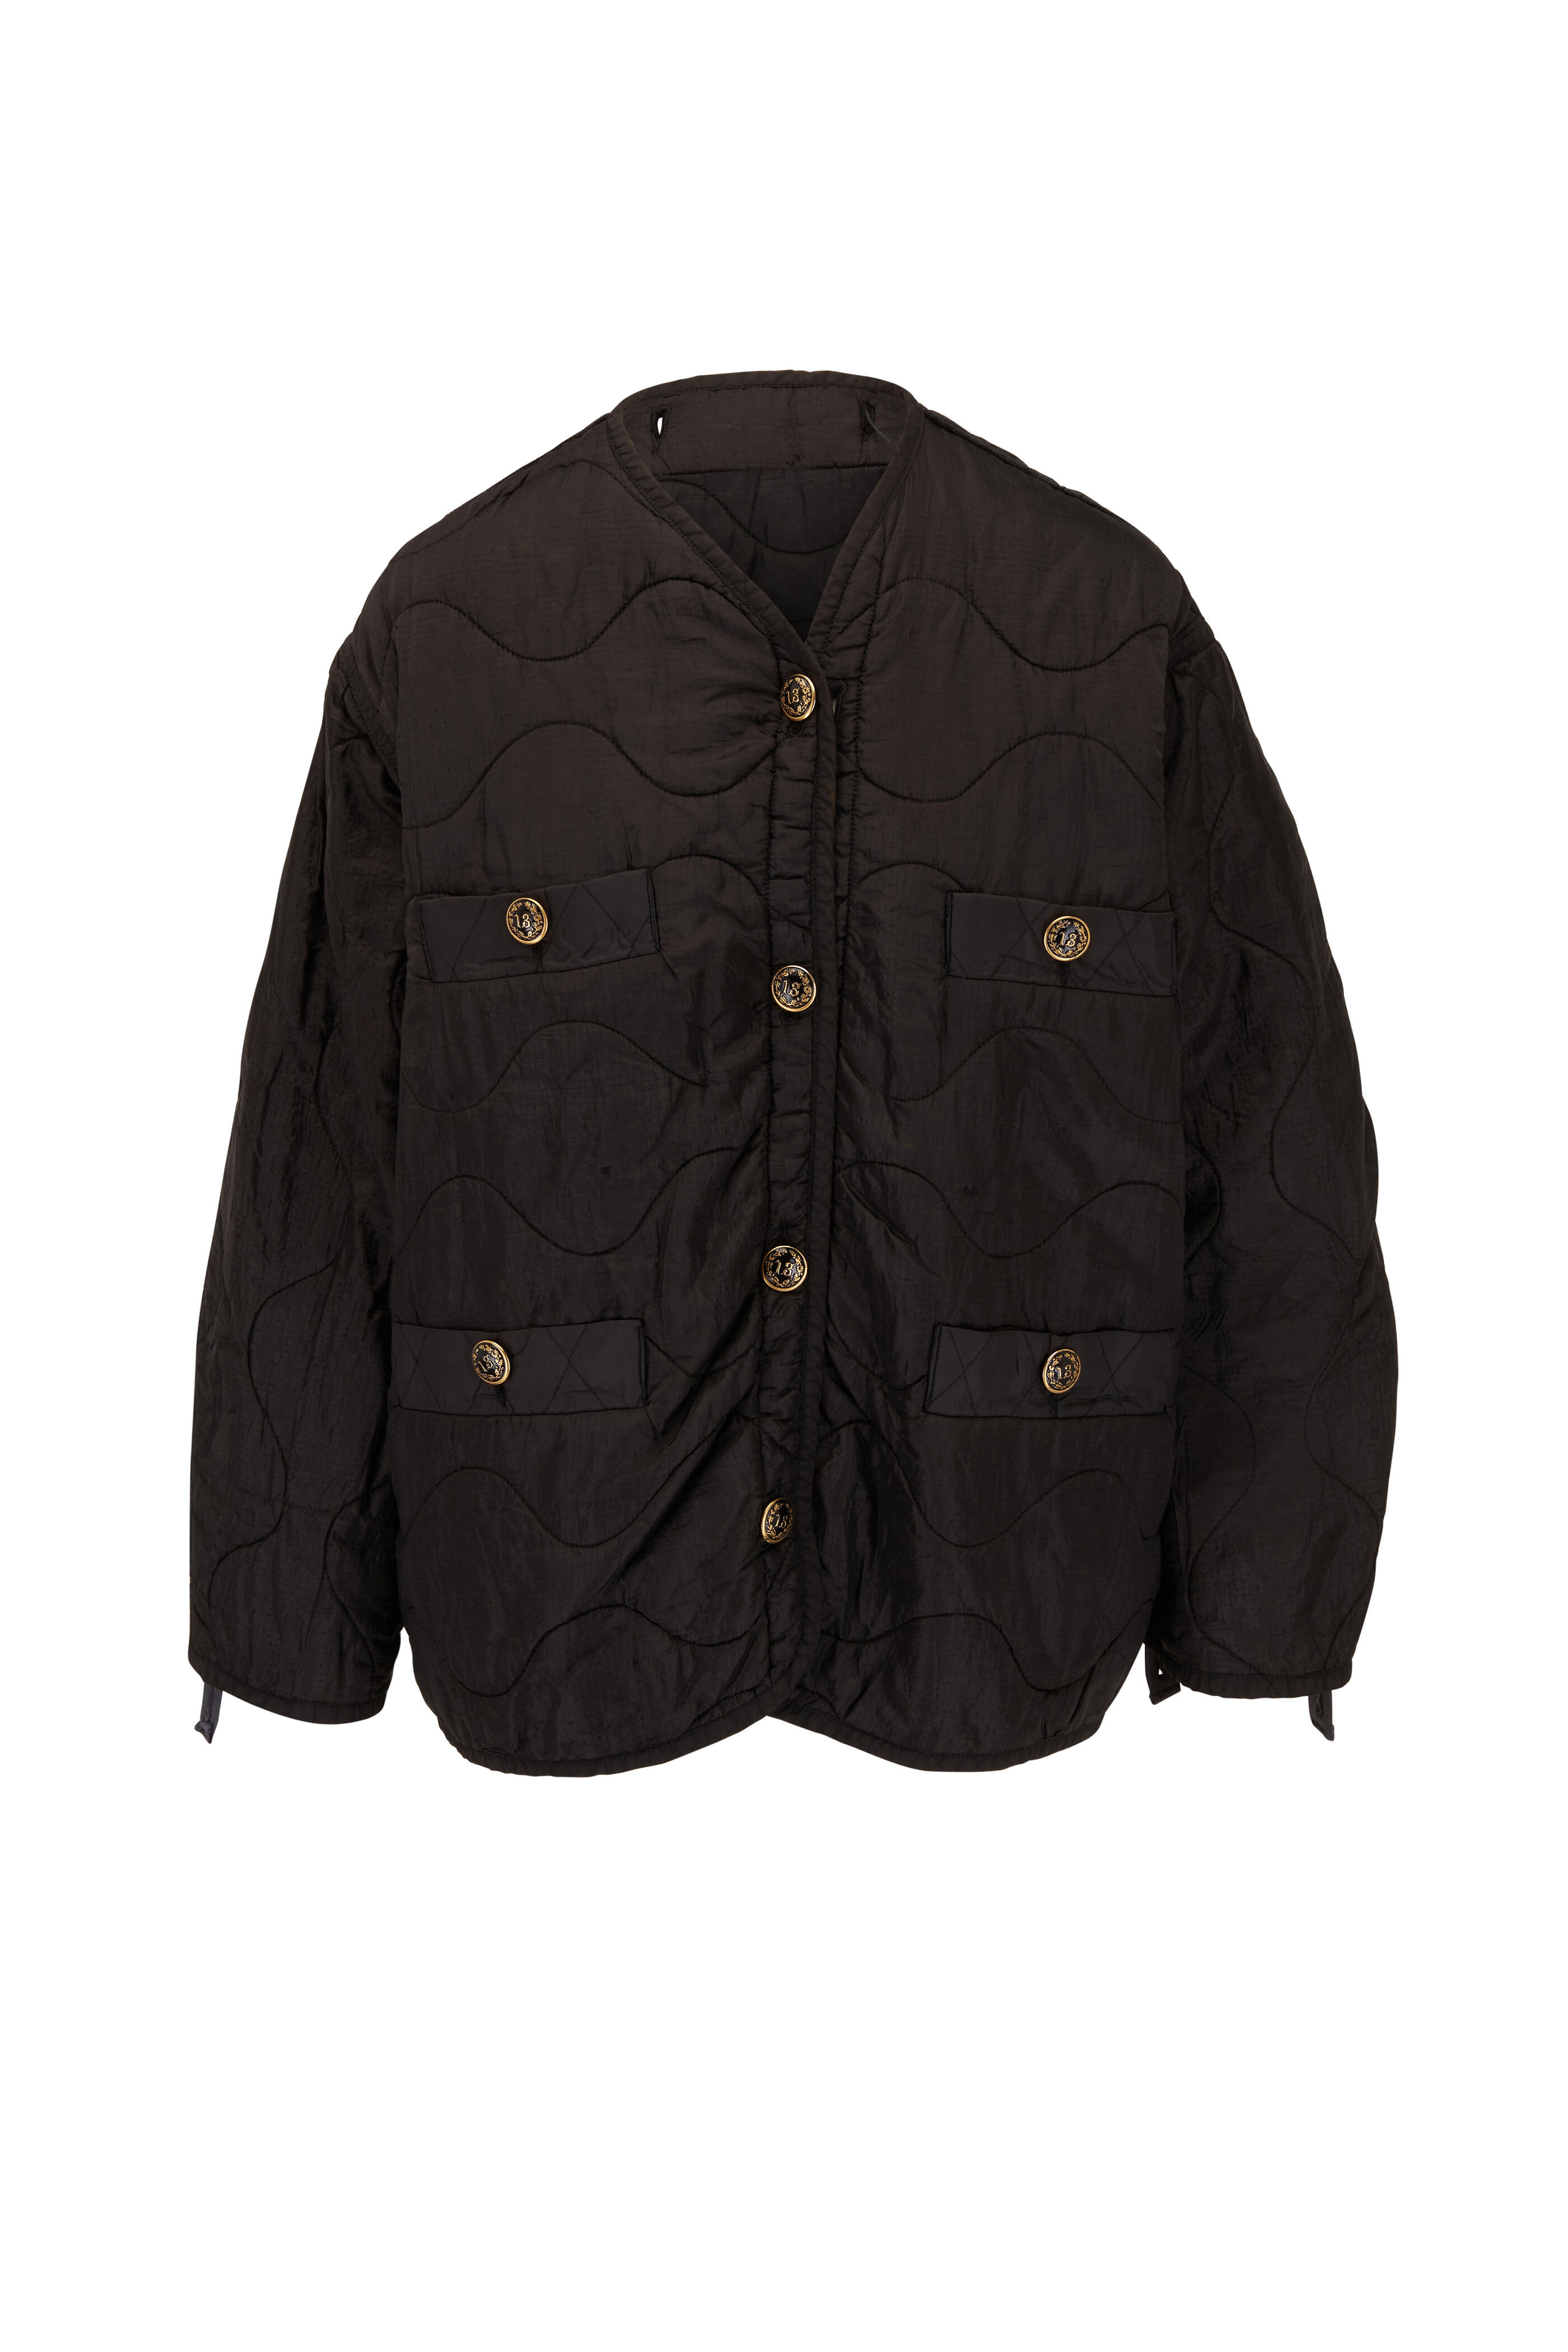 Scanlan Theodore - Black Crepe Knit Drape Front Jacket